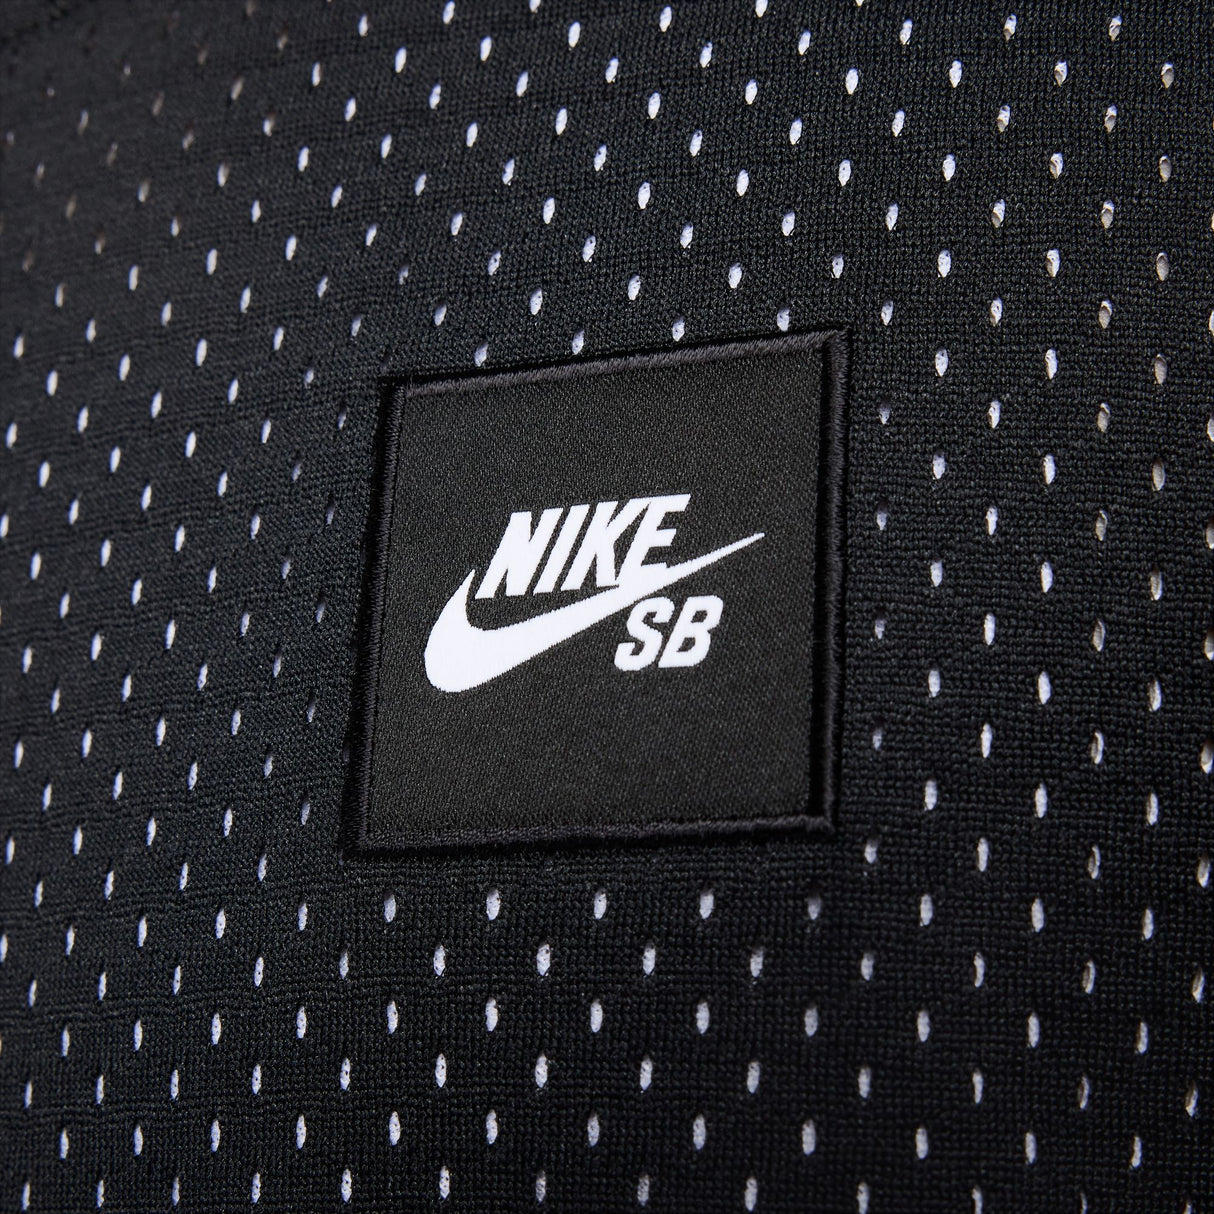 Nike SB Black/White Reversible Basketball Jersey